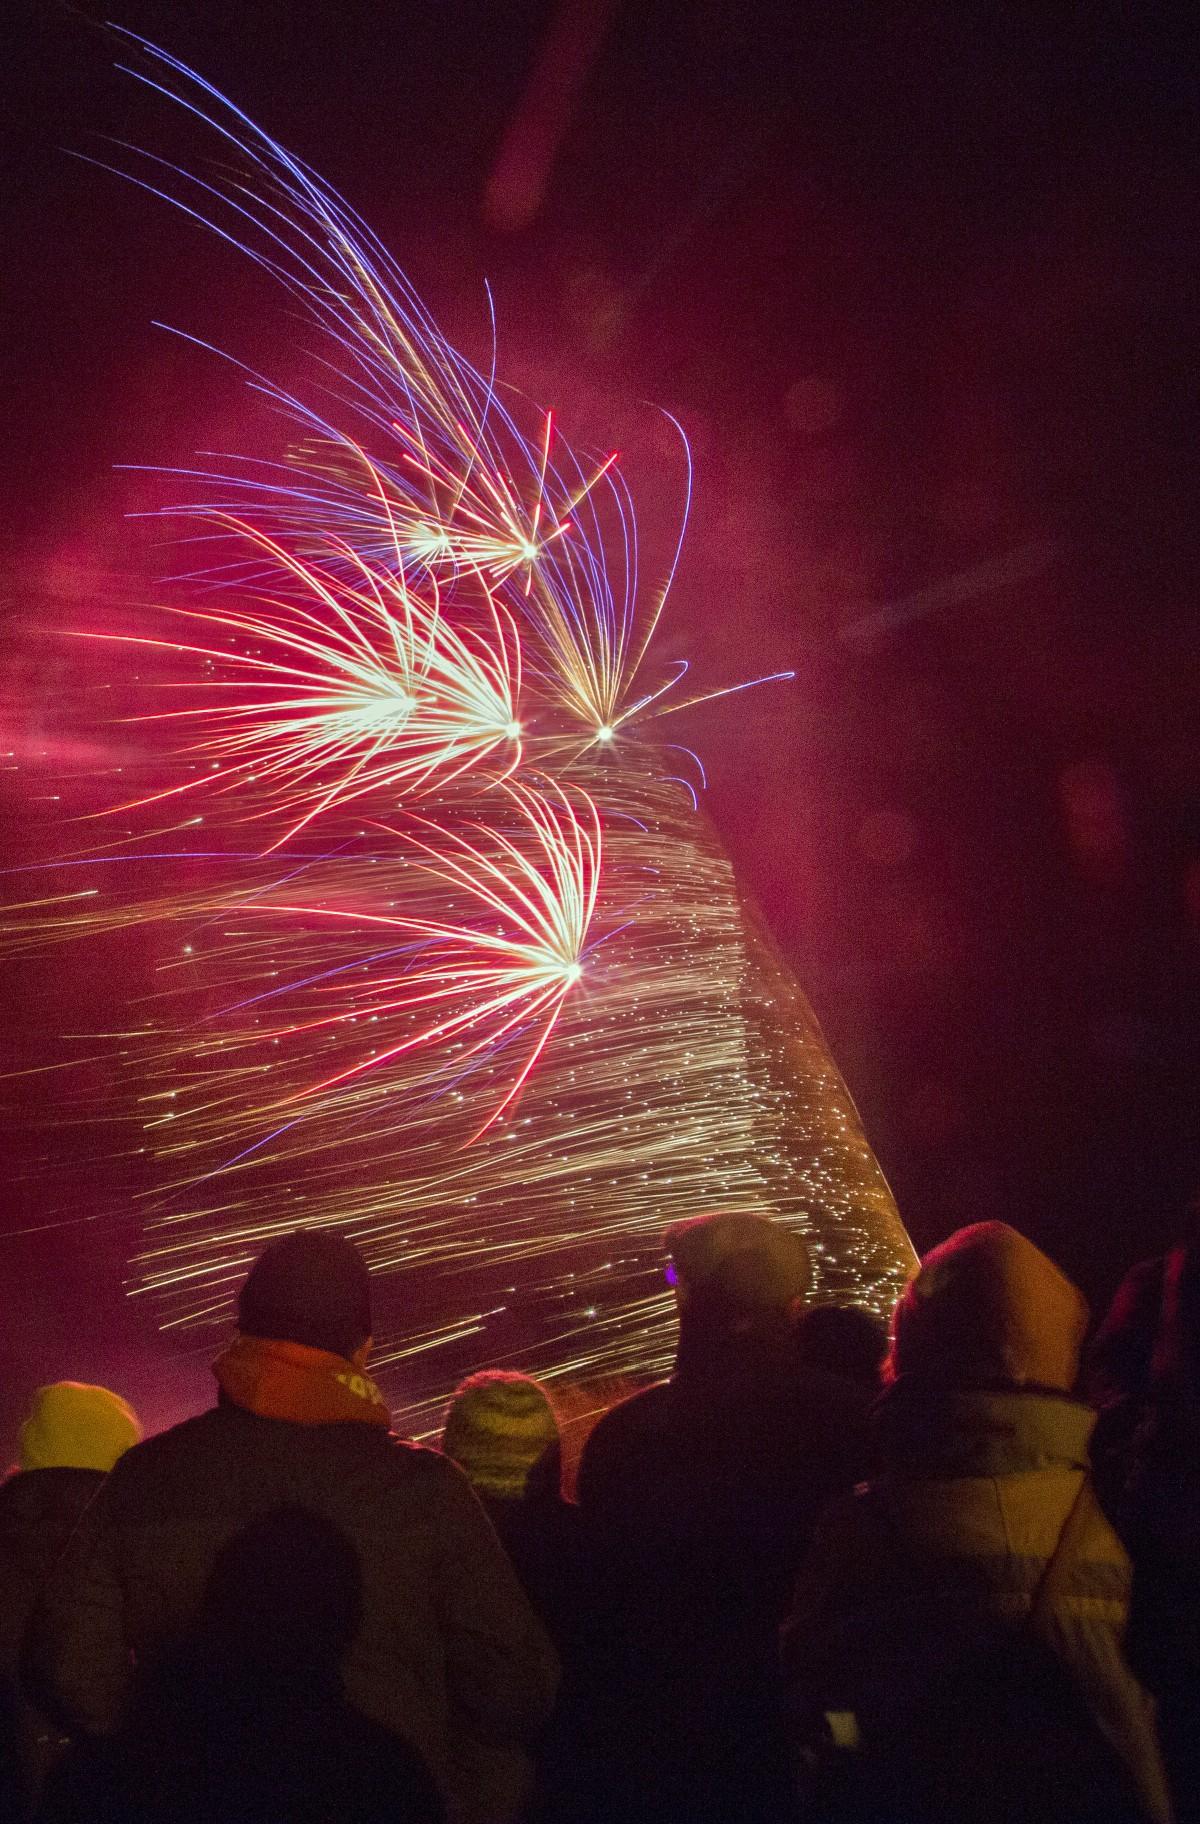 Fireworks at Stanpit Recreation Ground on Saturday November 2